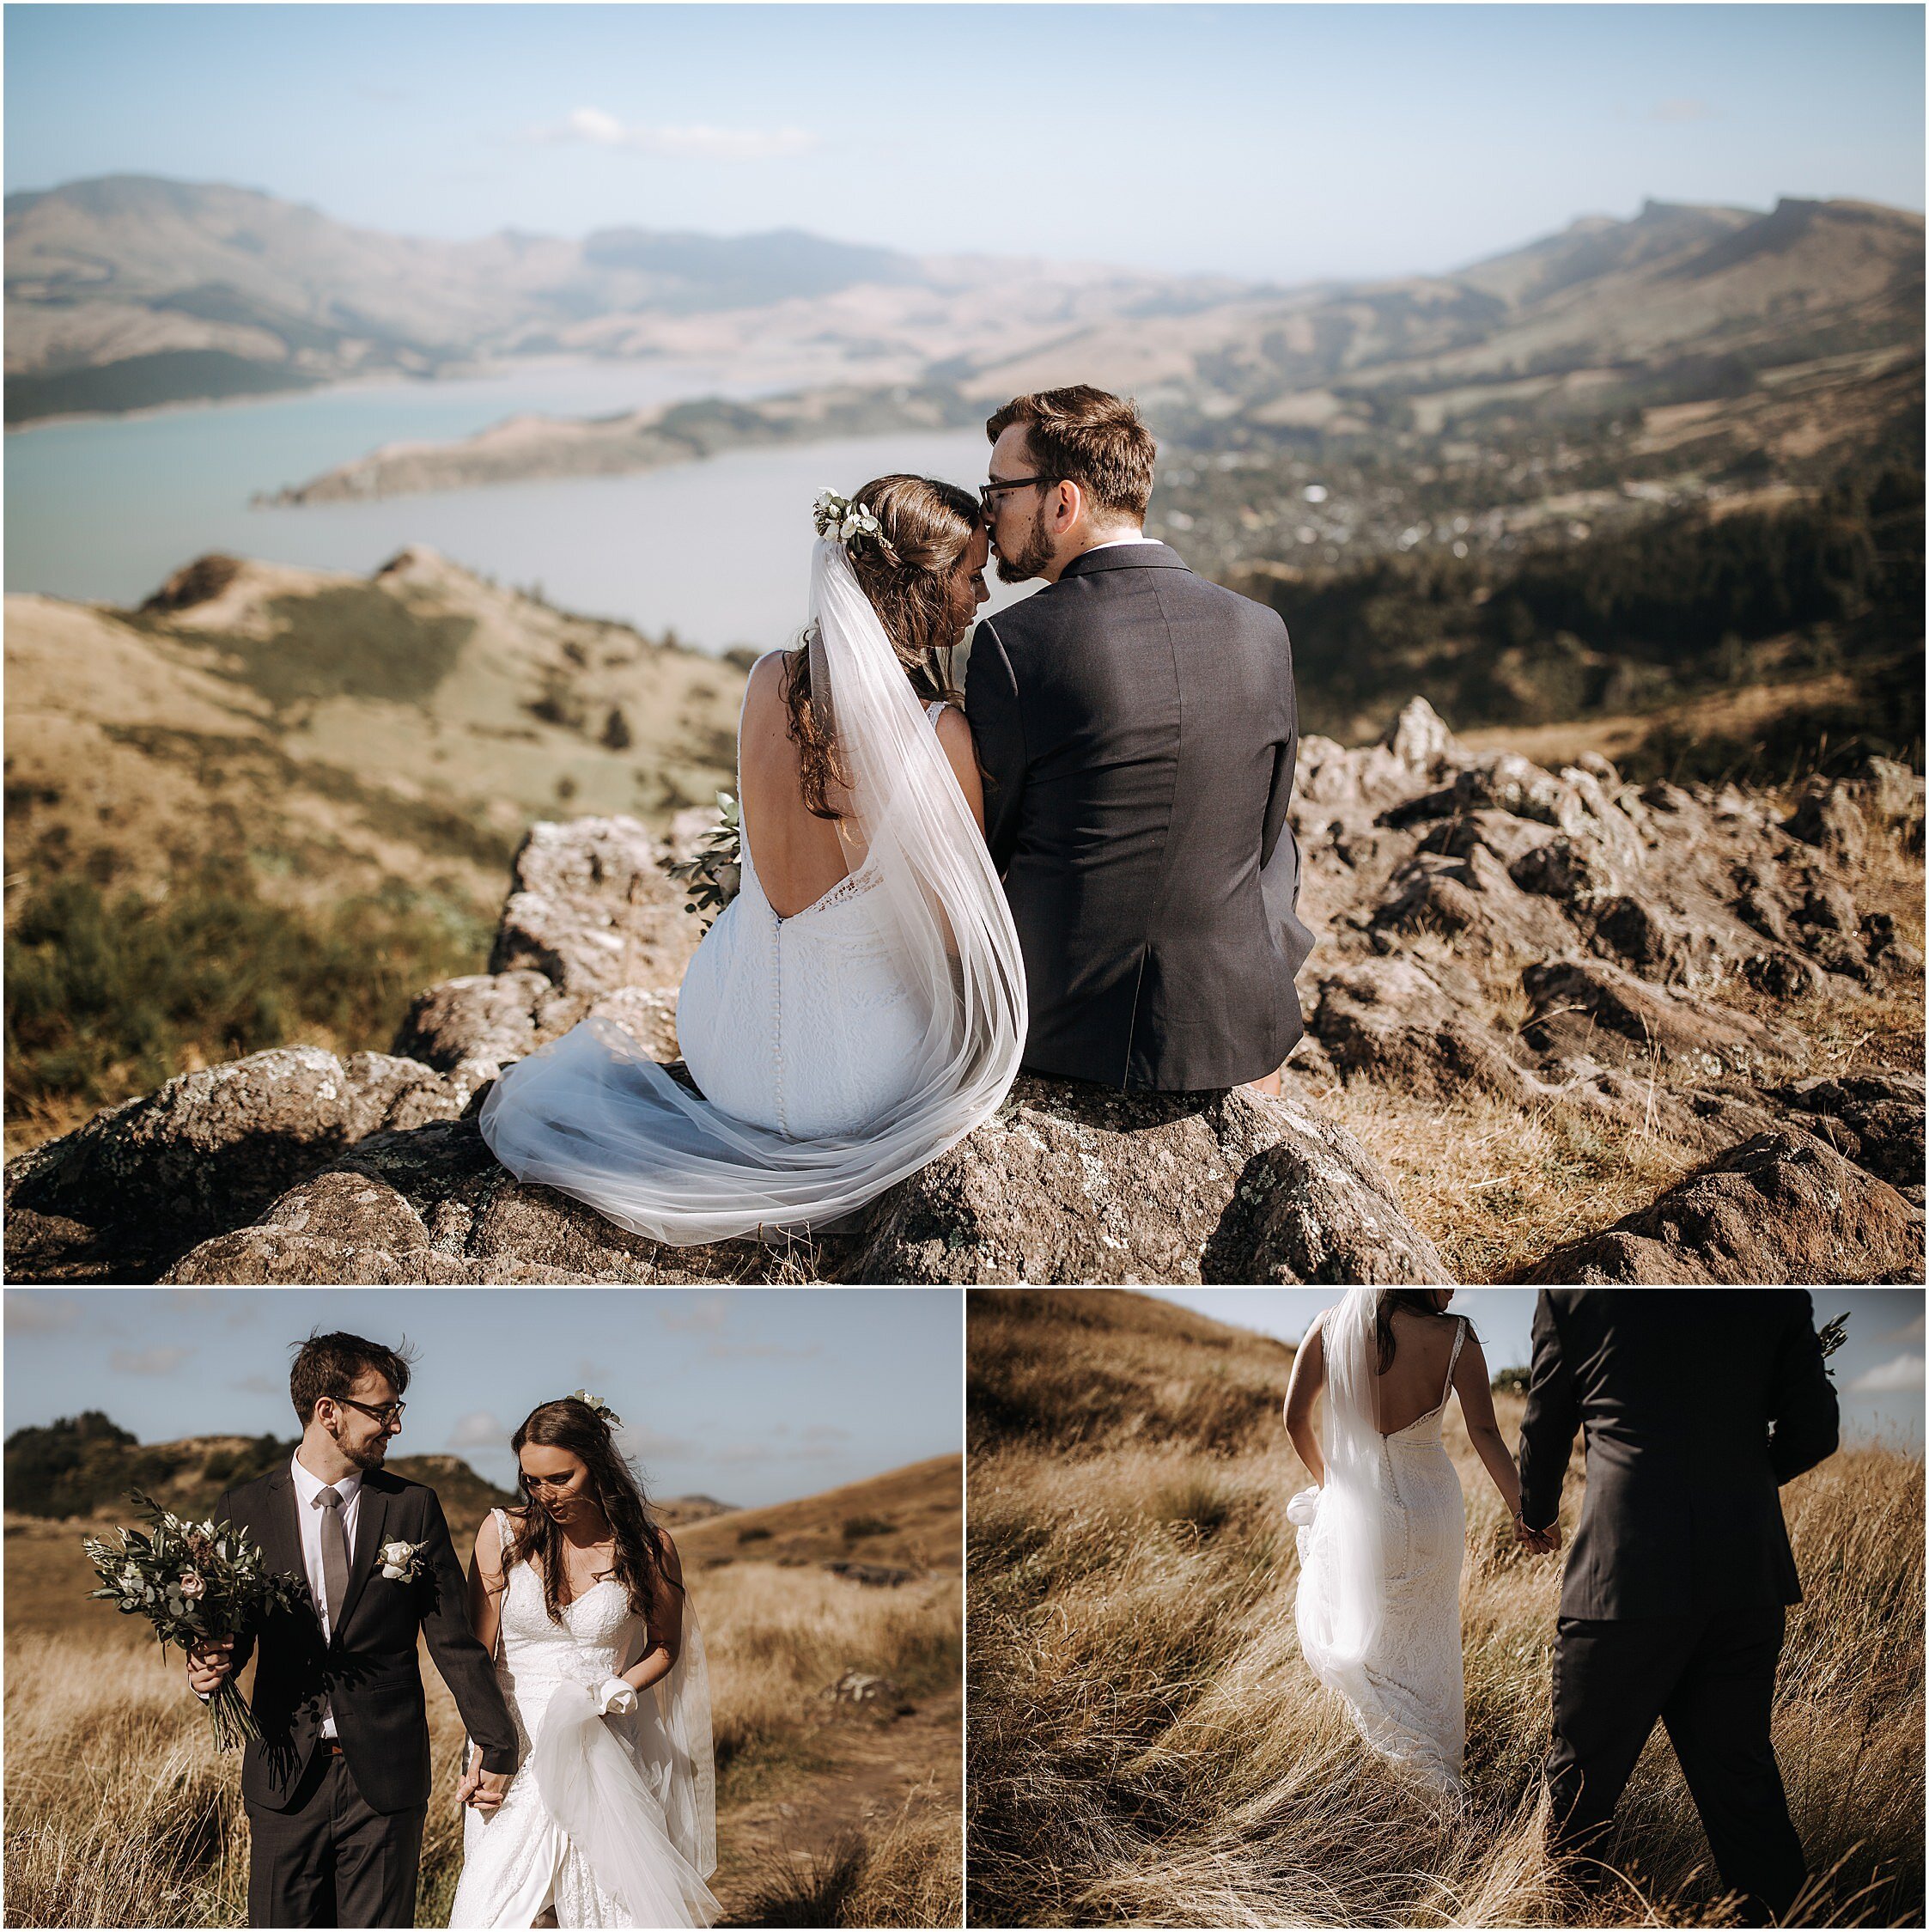 Zanda+Auckland+wedding+photographer+retro+car+Port+Hills+fairytale+garden+venue+Christchurch+South+Island+New+Zealand_39.jpeg